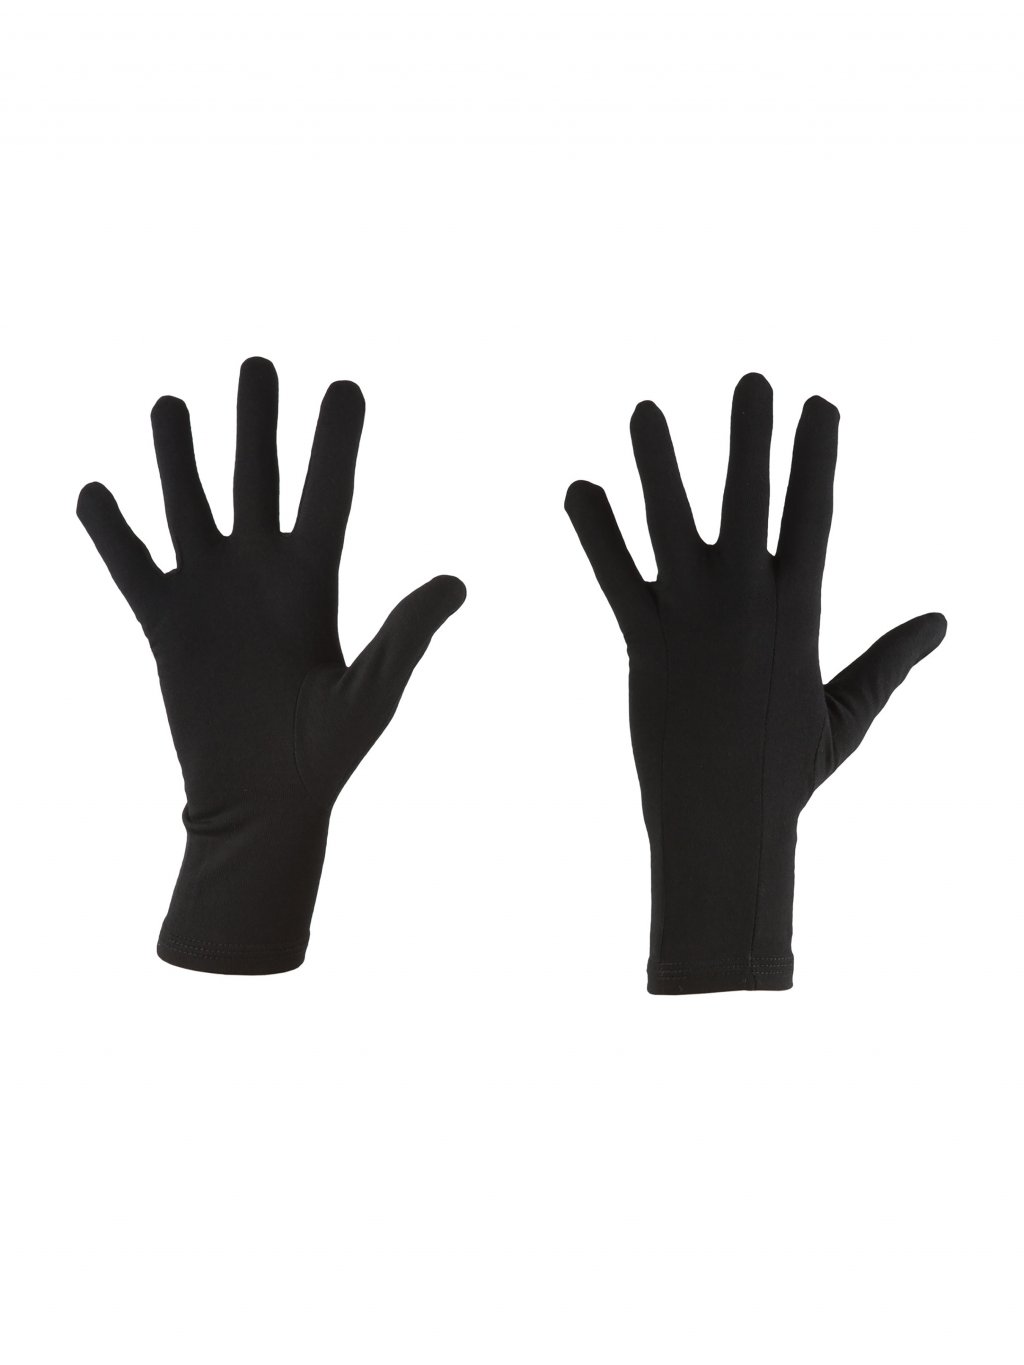 ICEBREAKER Adult 200 Oasis Glove Liner, Black (velikost XS)